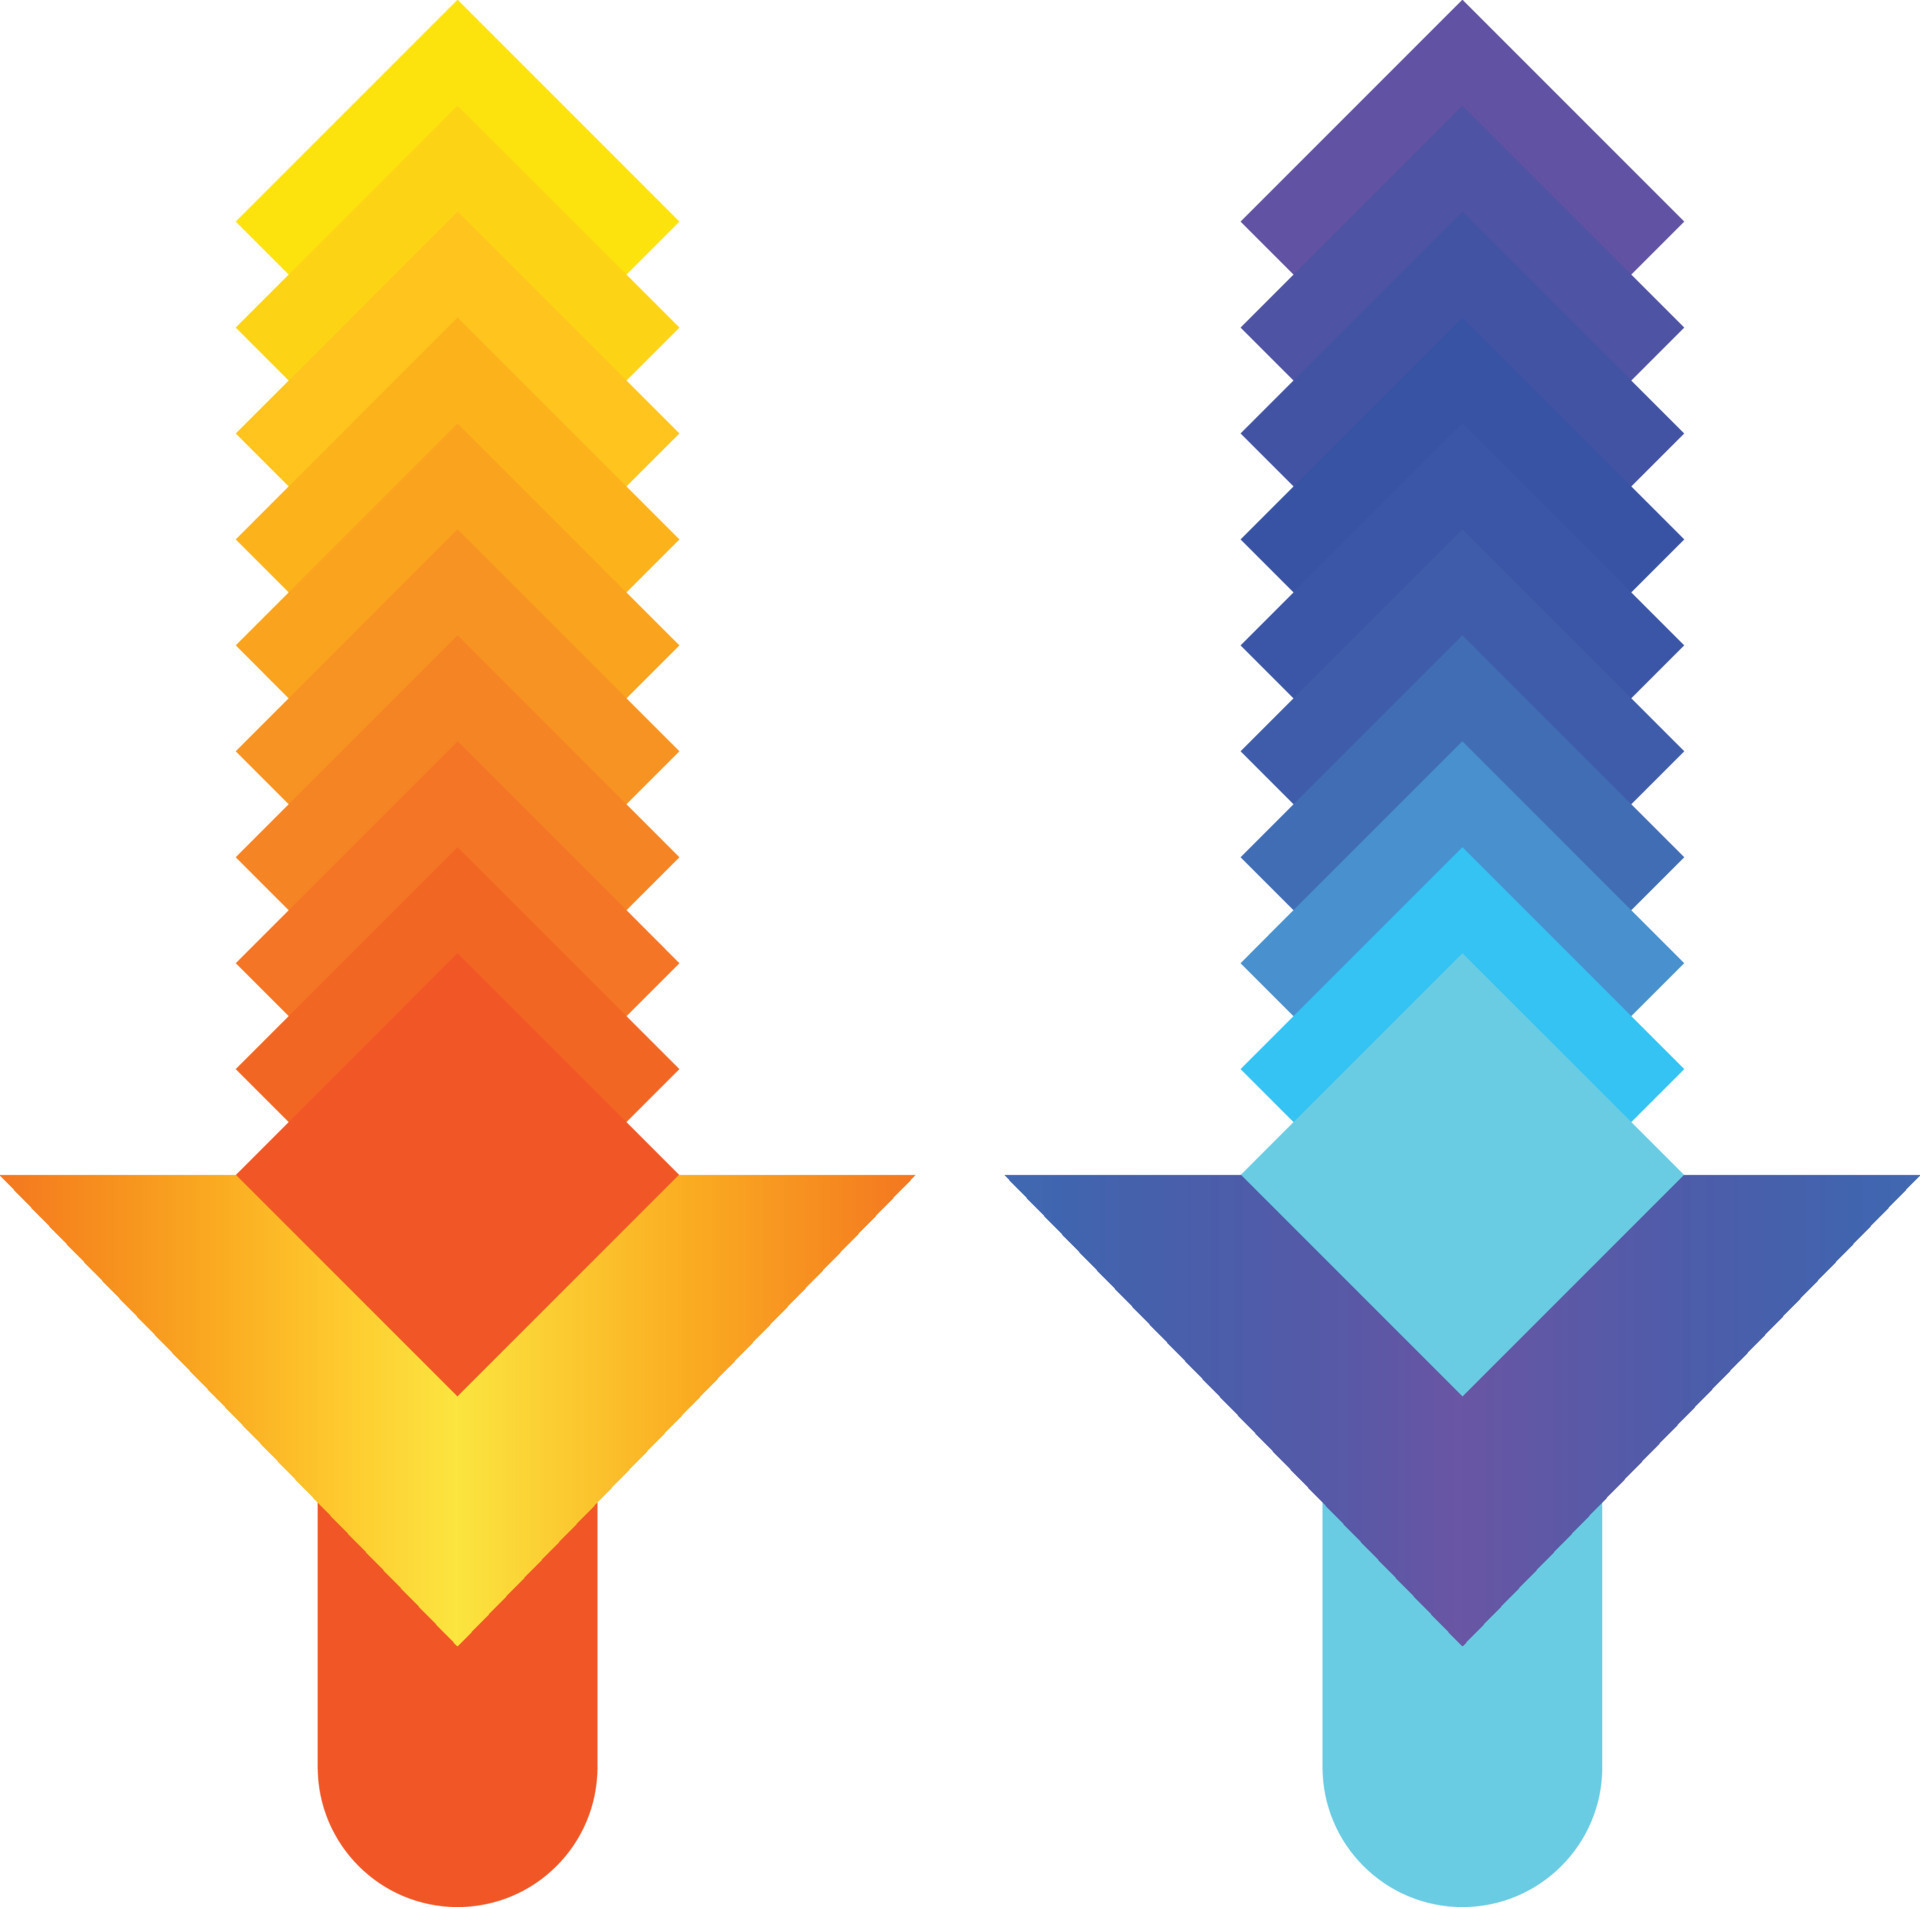 conceito de logotipo de espada geométrica para elemento de design gráfico  de jogo, espada de fogo e gelo 8976556 Vetor no Vecteezy